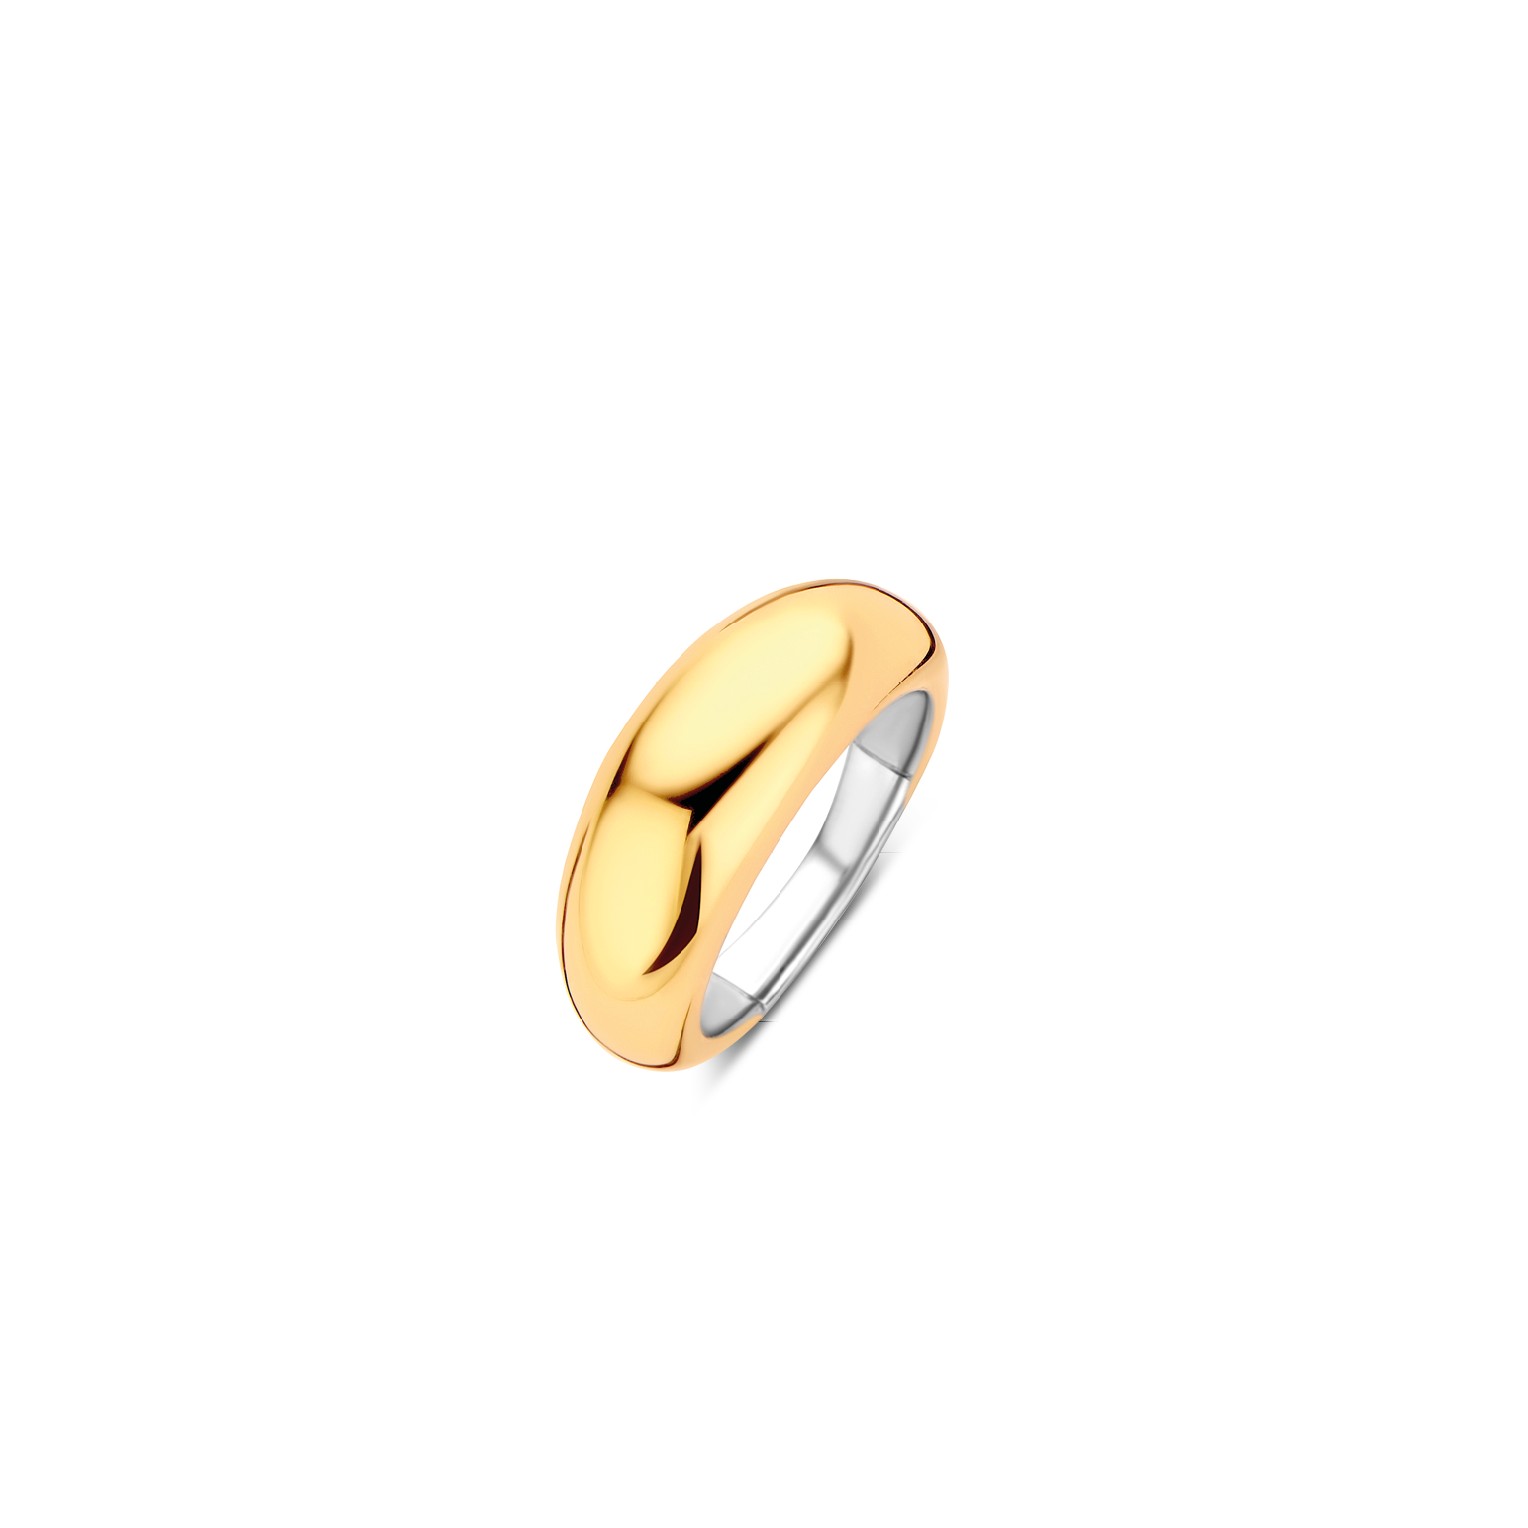 TI SENTO - Milano Ring 12172SY Gala Jewelers Inc. White Oak, PA